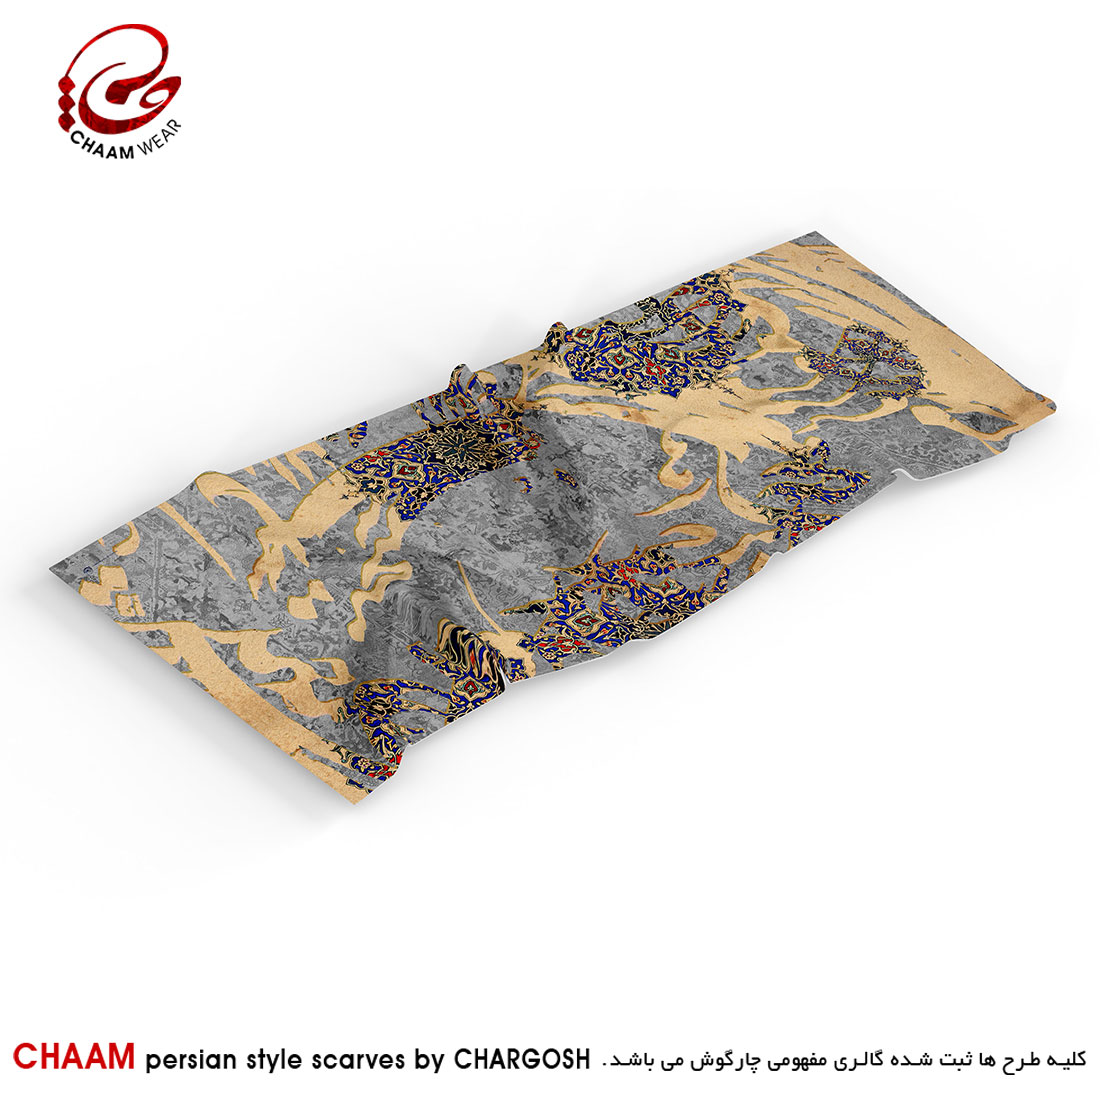 CHAAM scarf persian artistic design